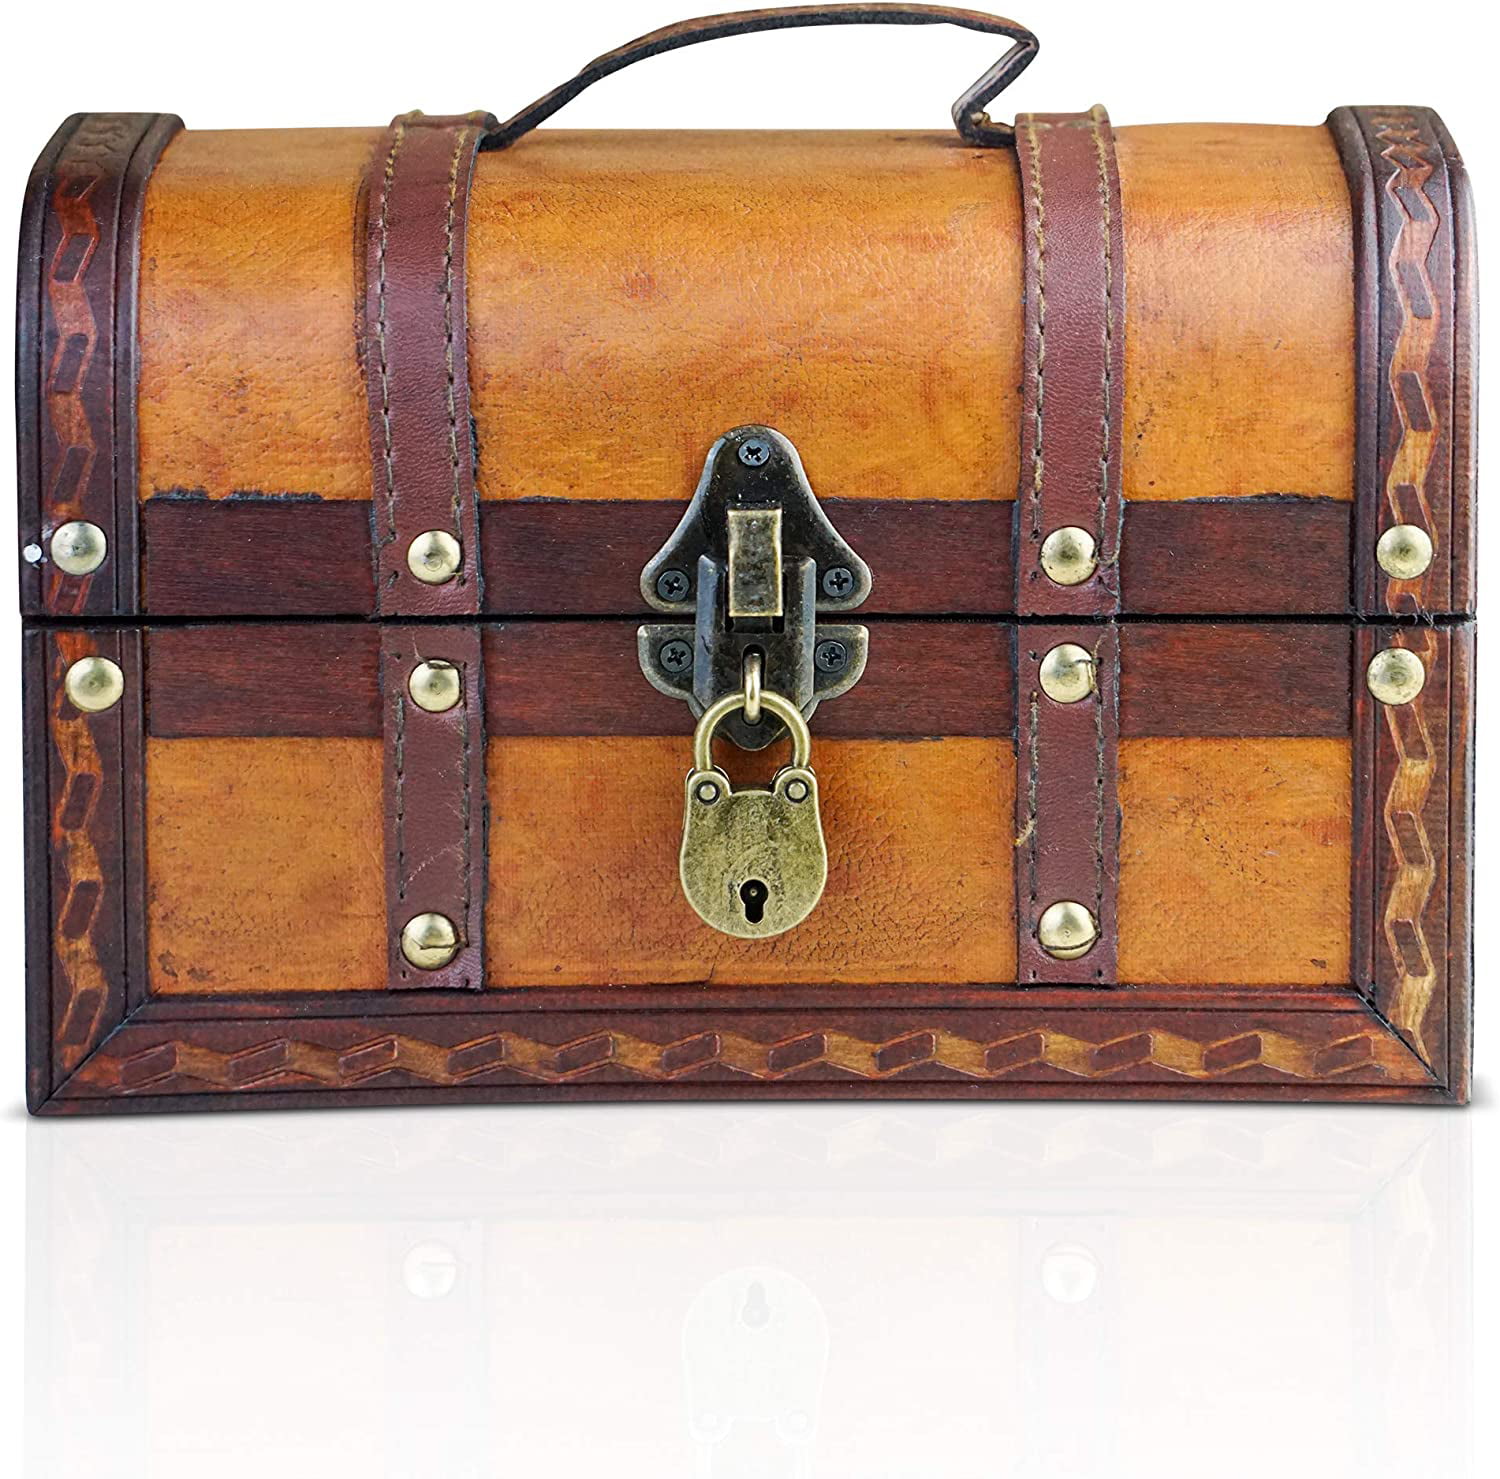 Brynnberg XL wooden pirate treasure chestdecorative storage box model| 